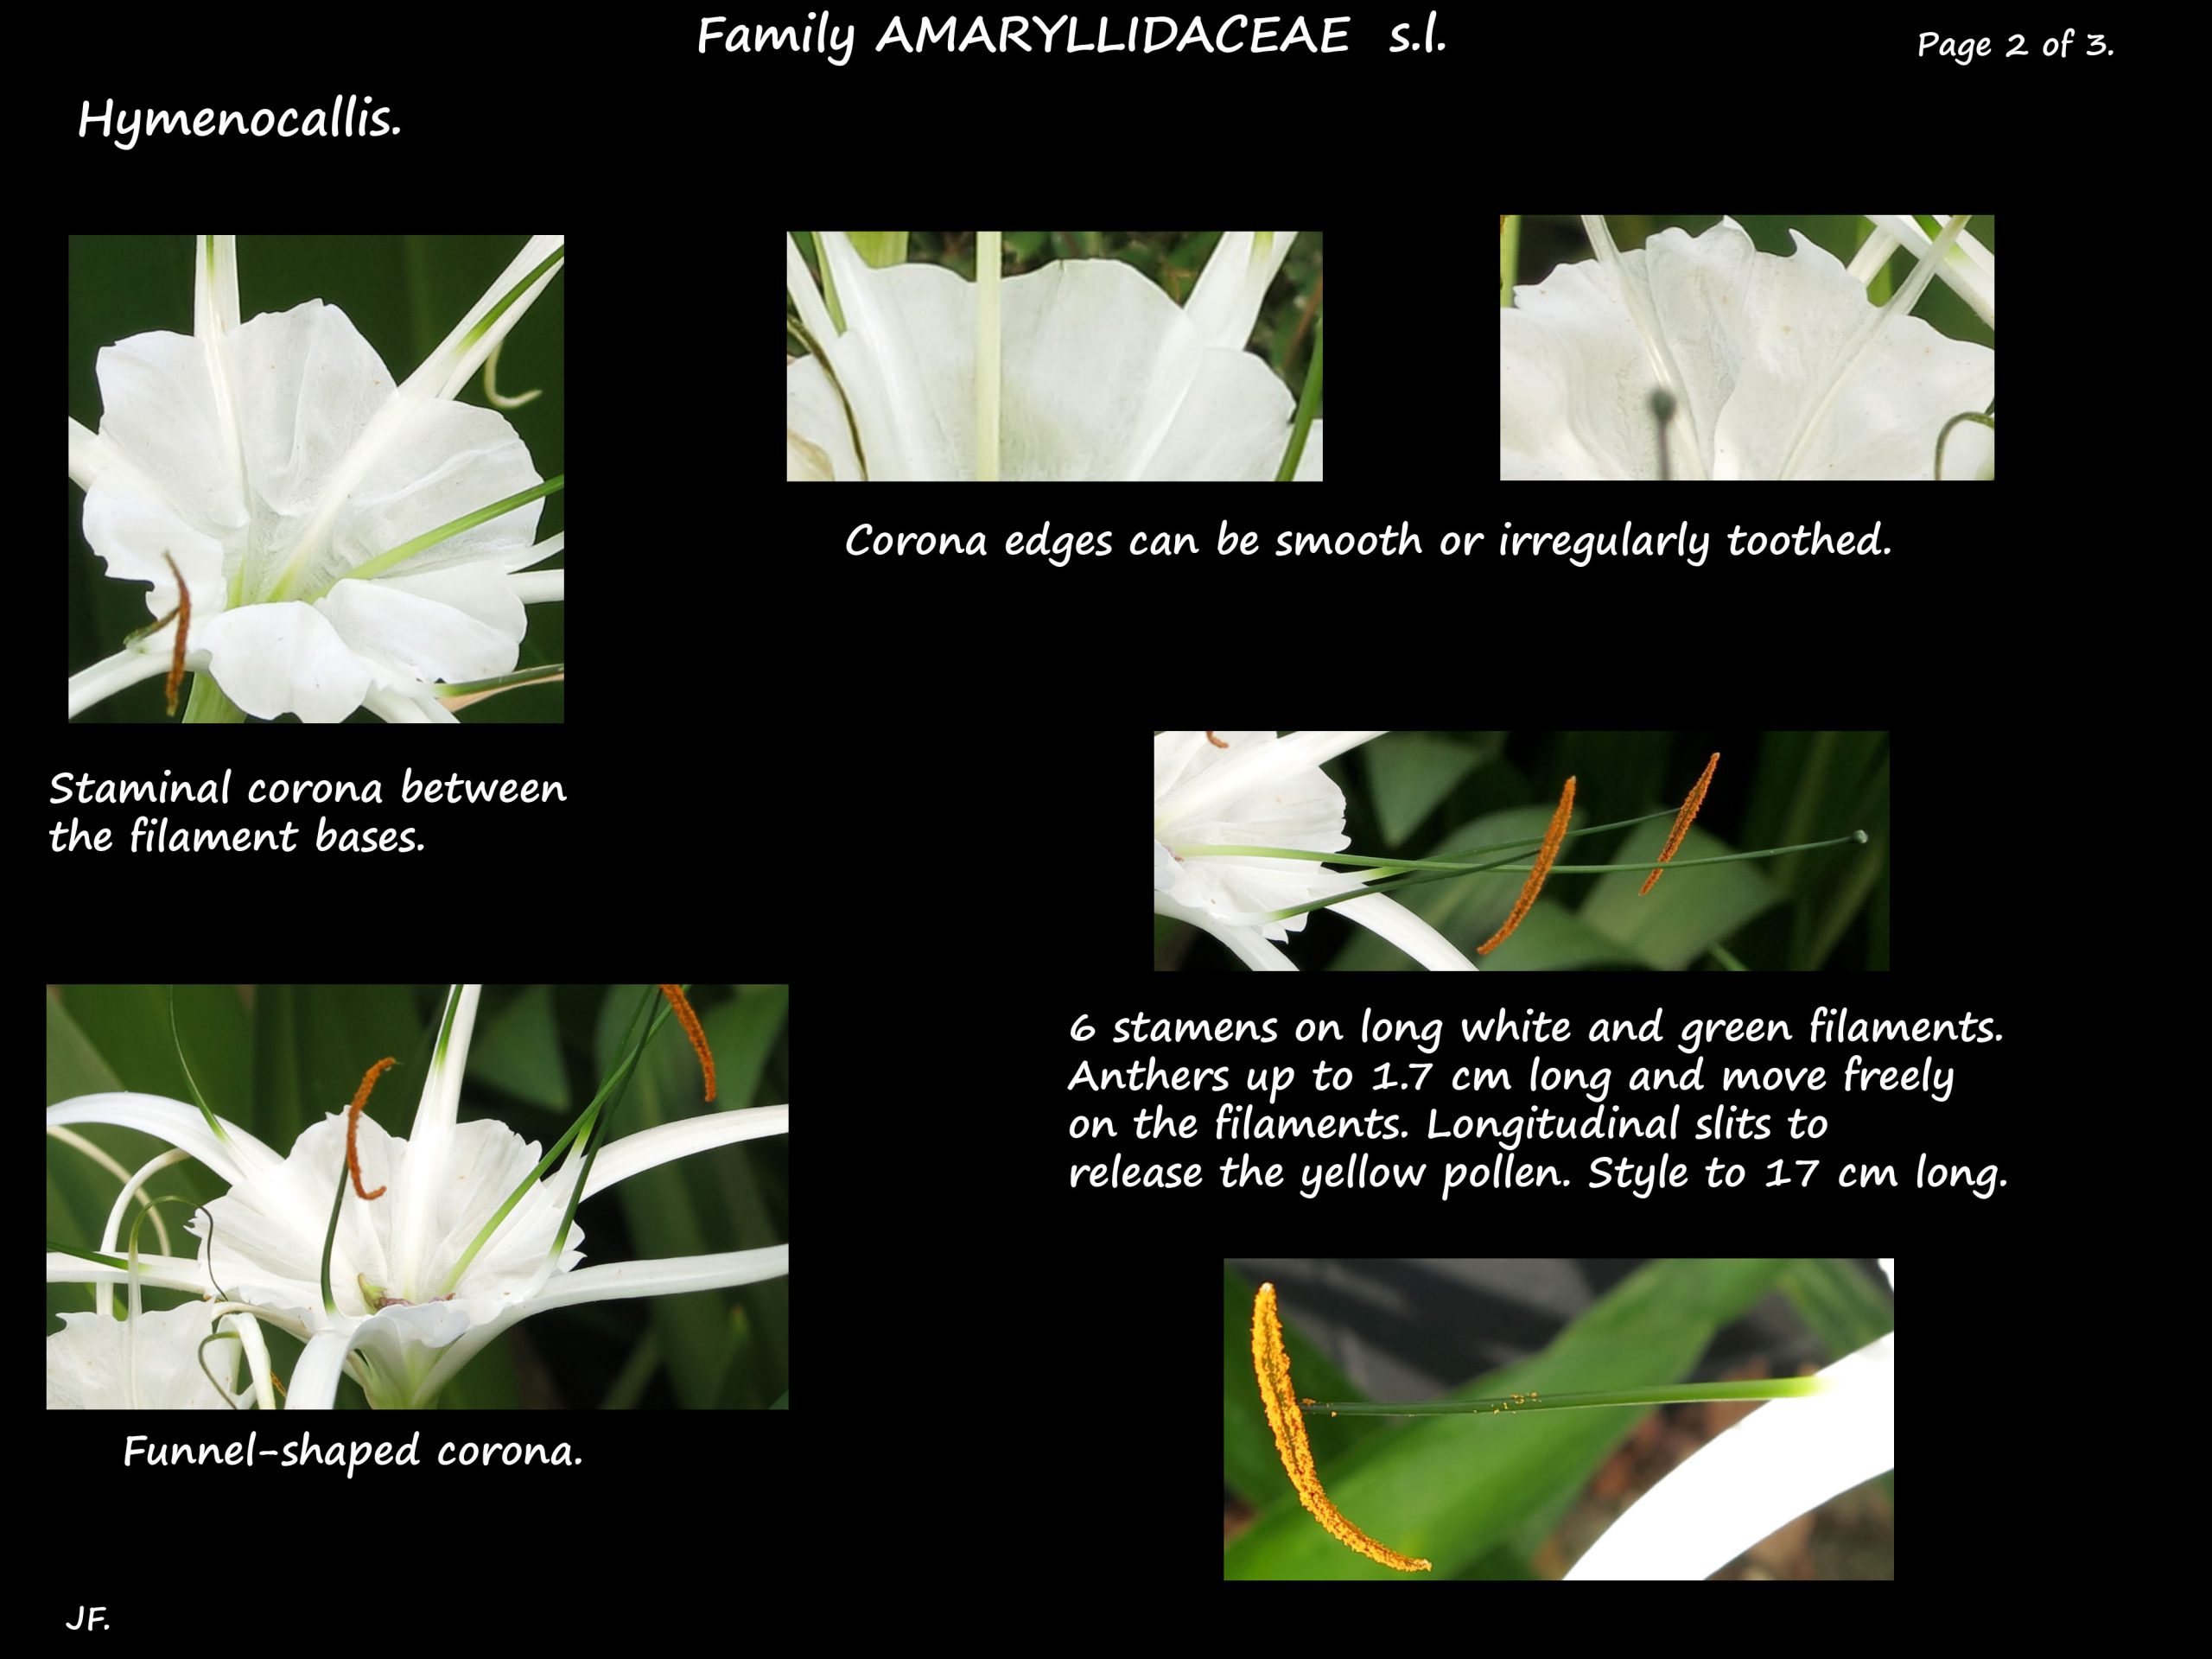 2 Hymenocallis flowers